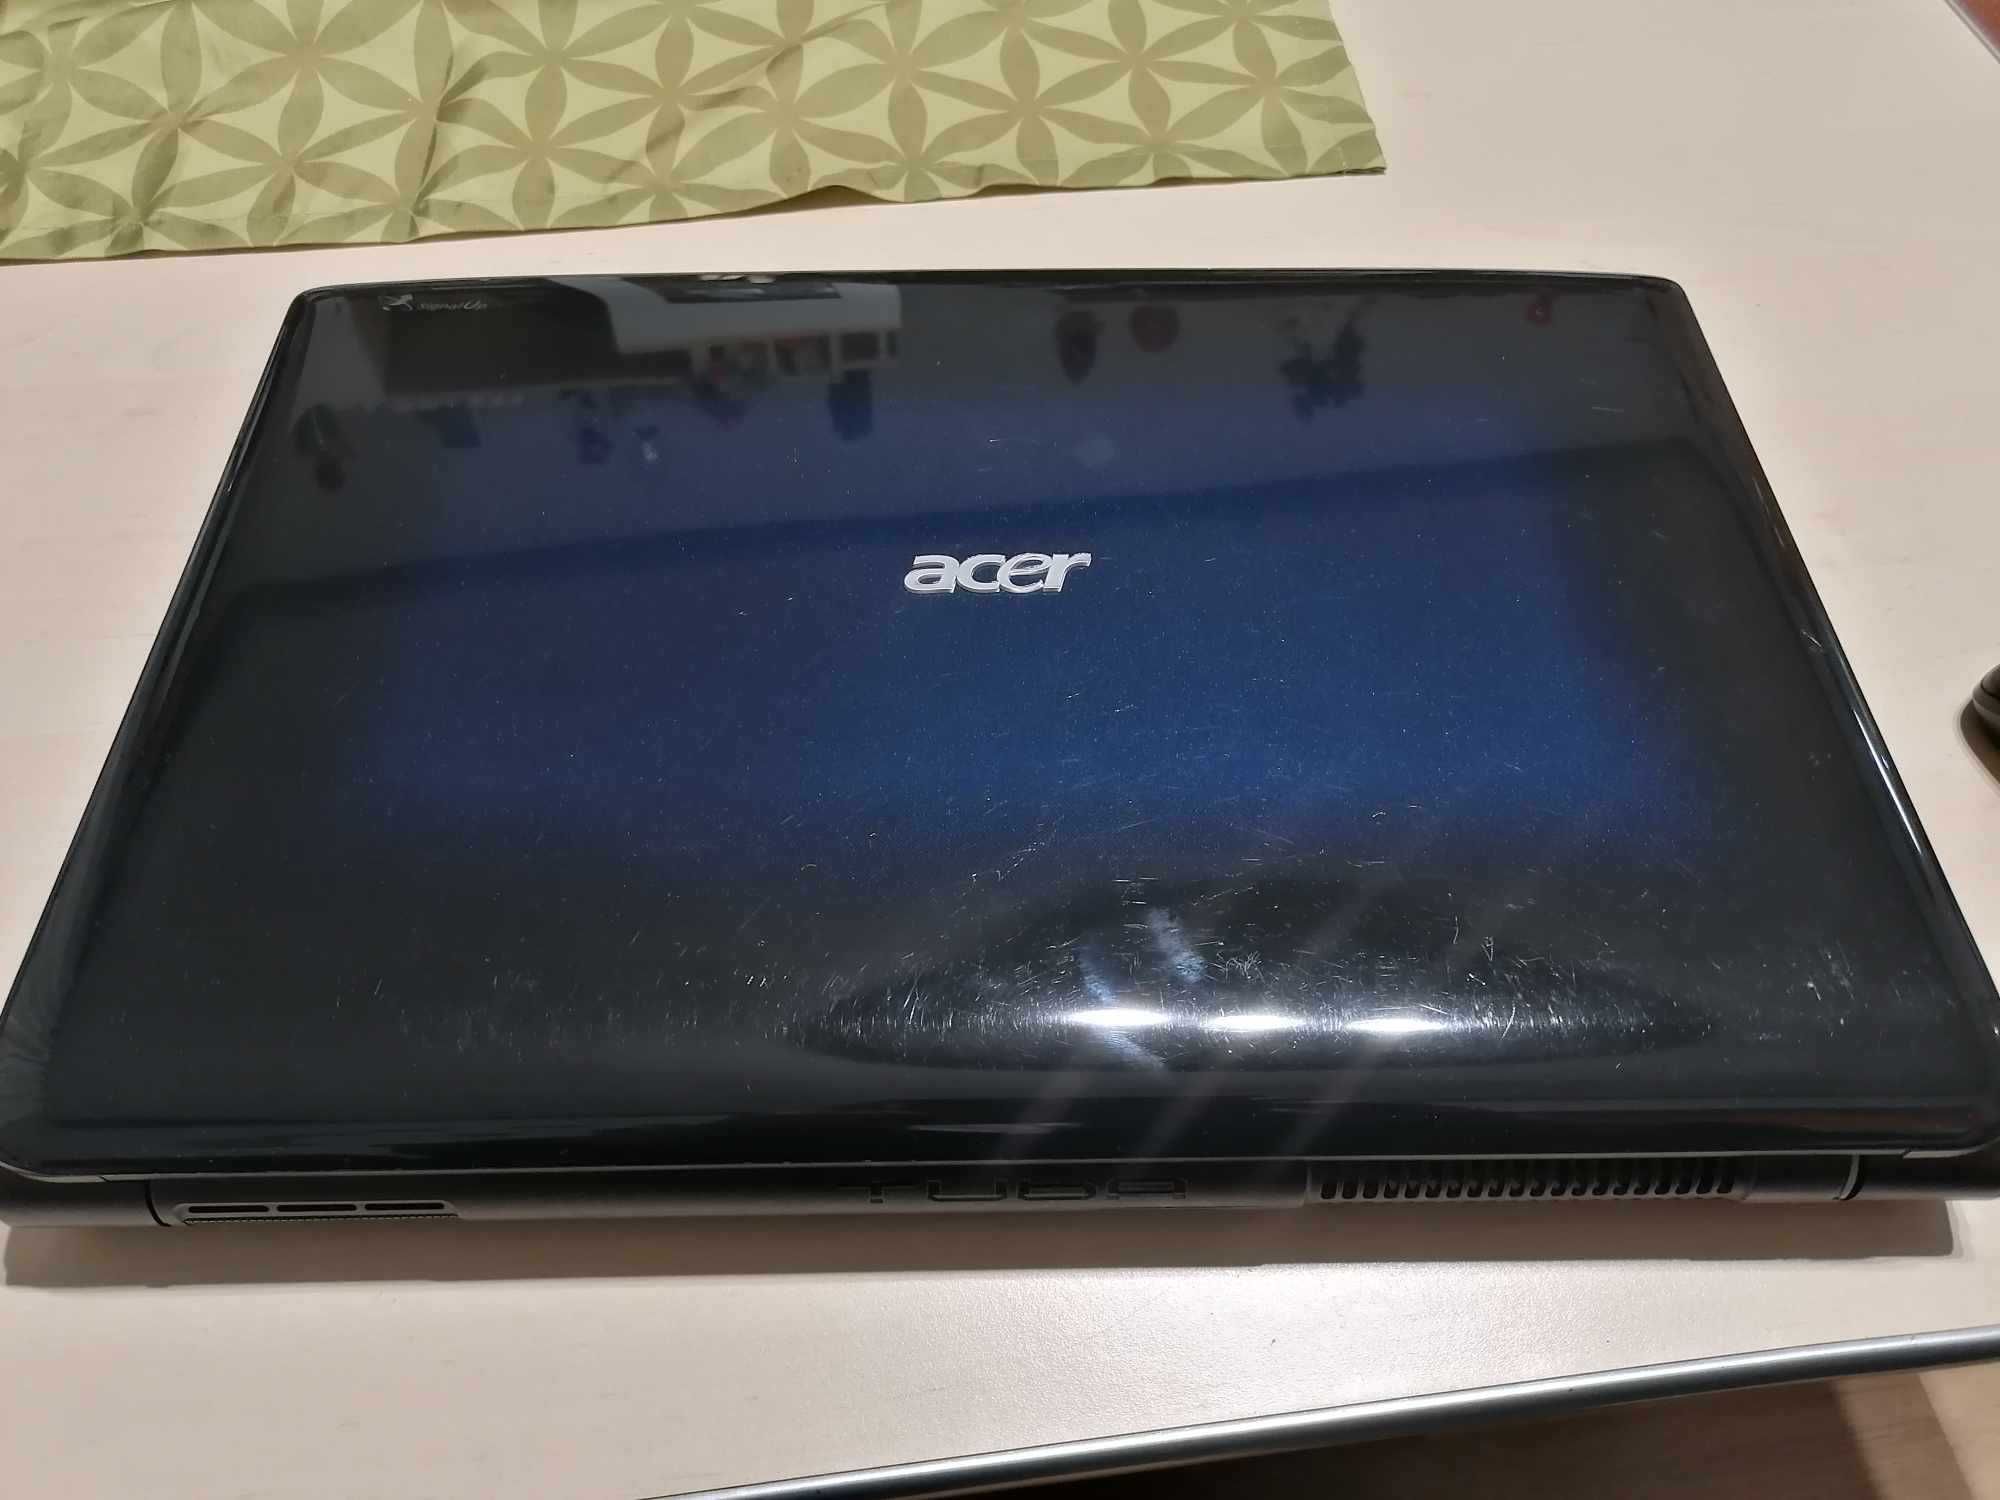 Acer Aspire 8930G 18" Intel Quad core NVIDIA, Bluray, Bluetooth